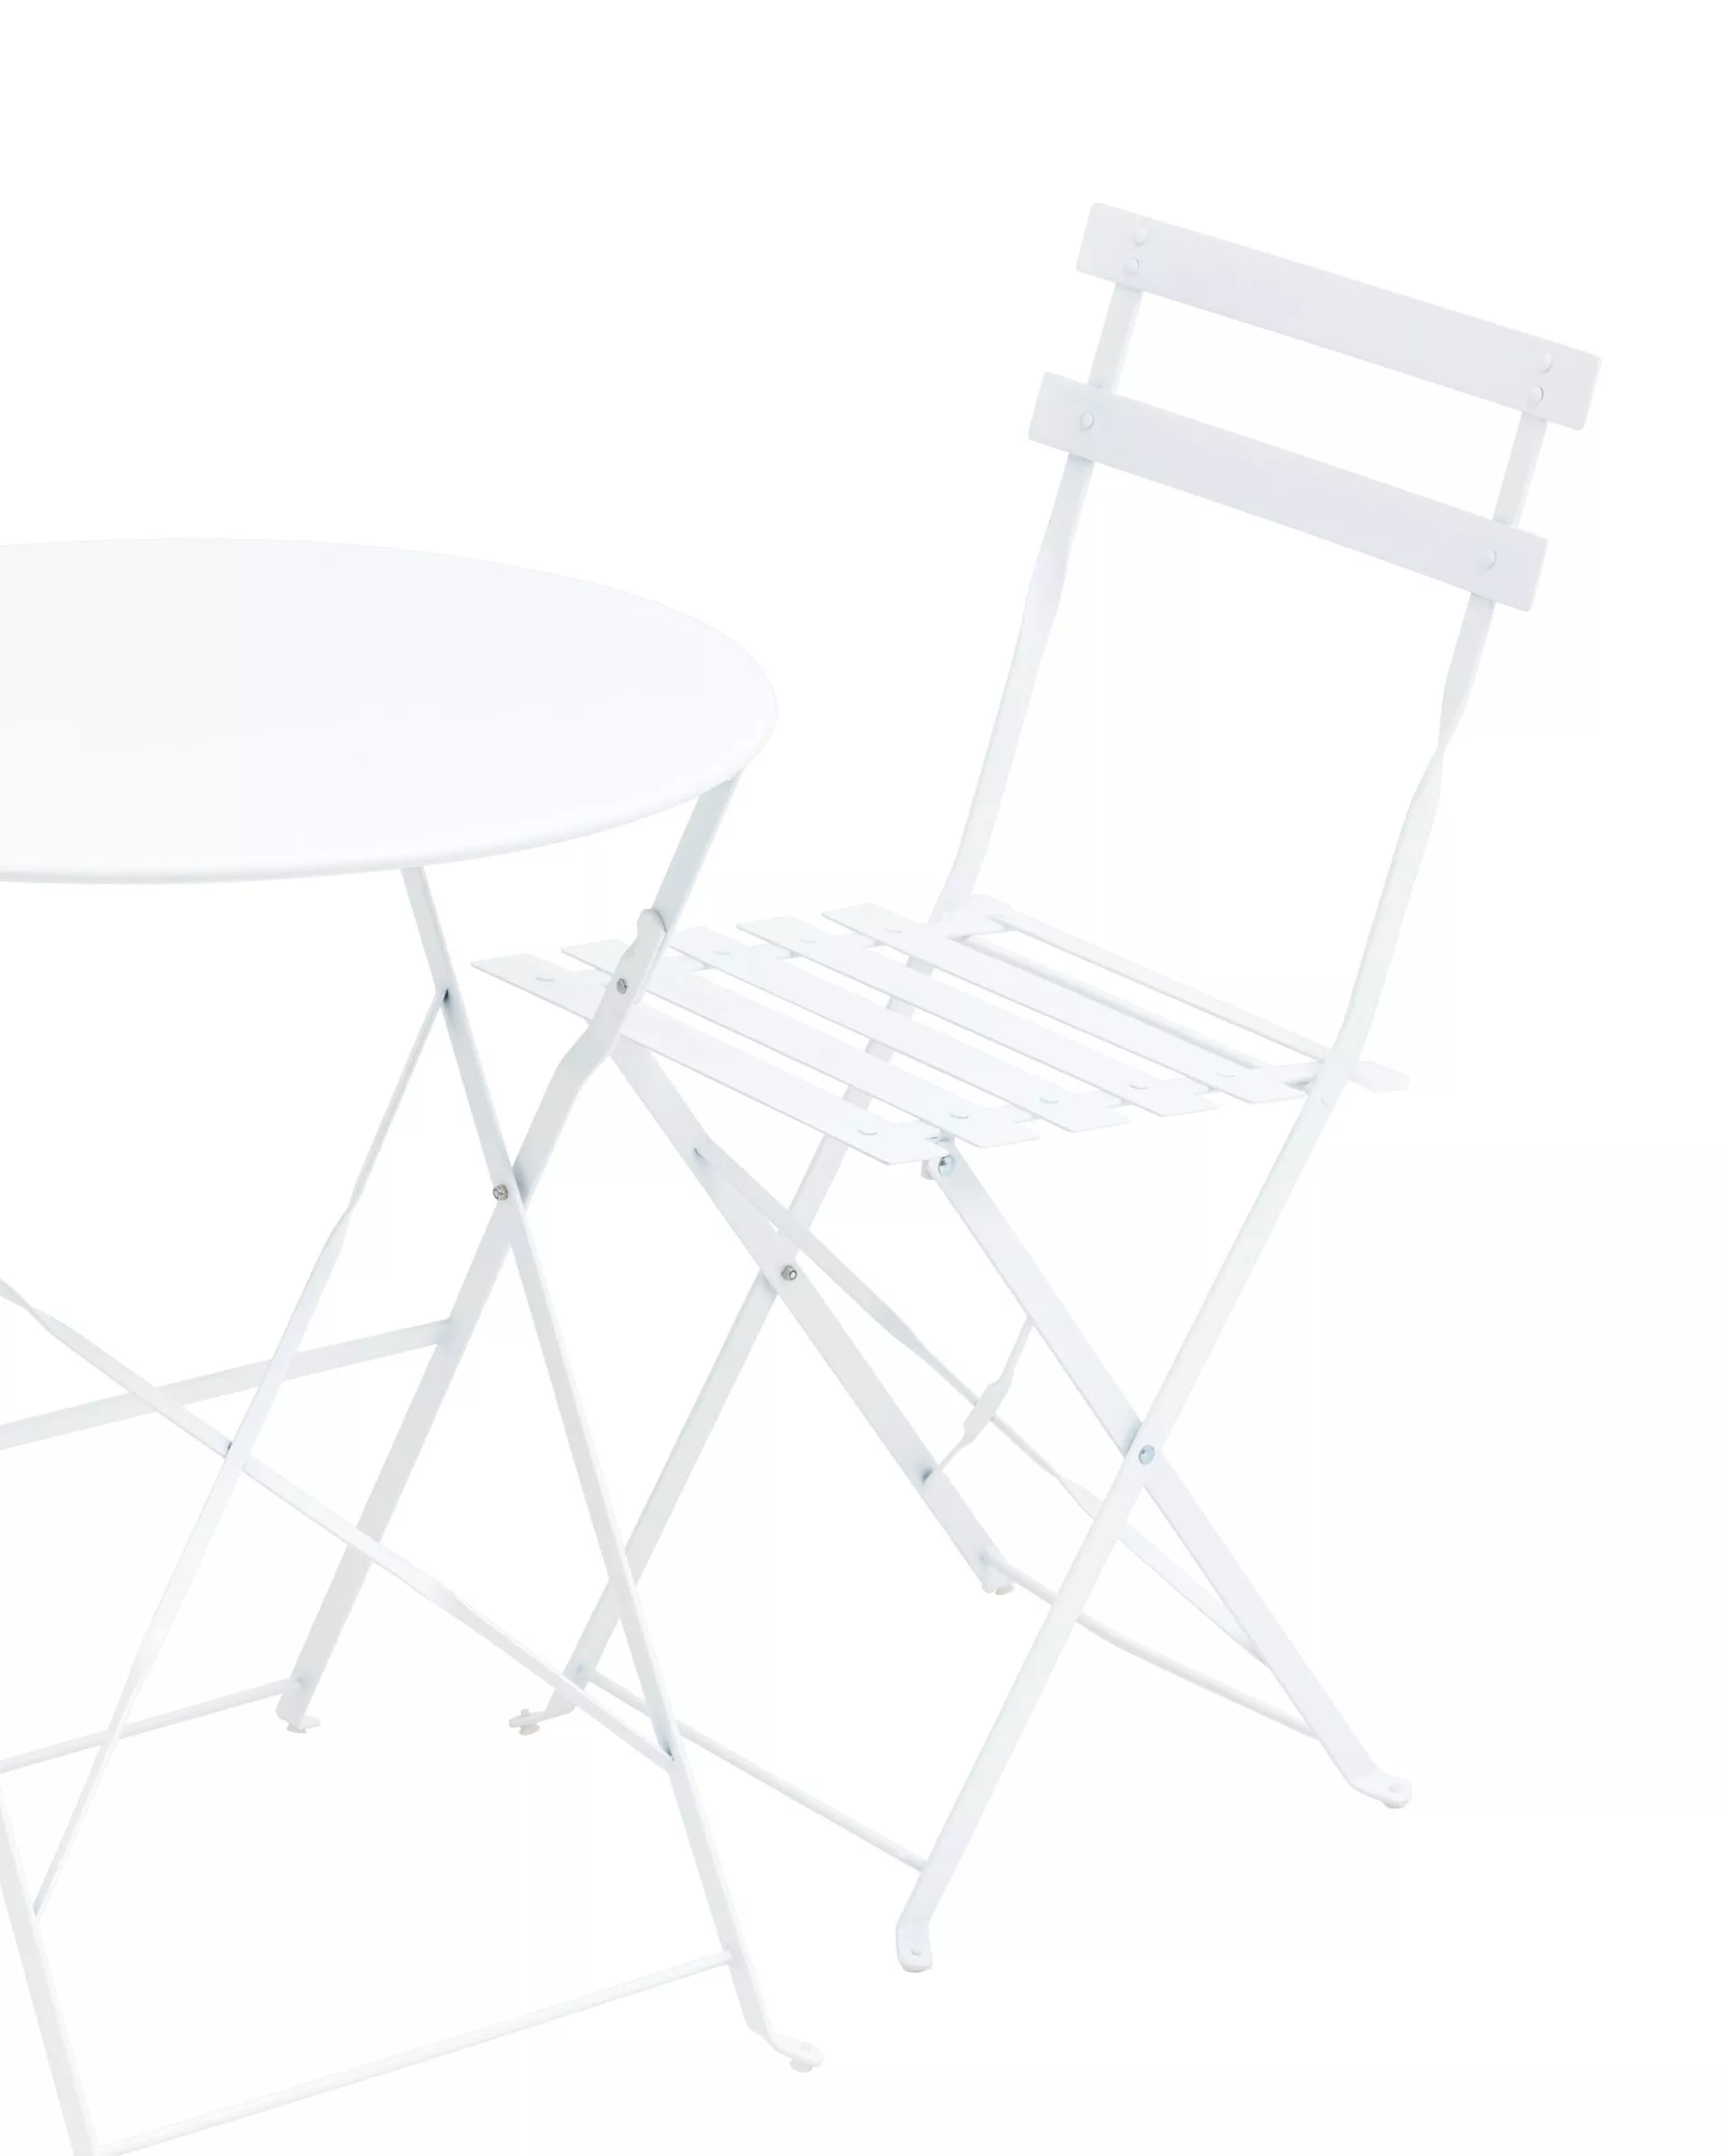 Комплект стол и два стула Бистро белый